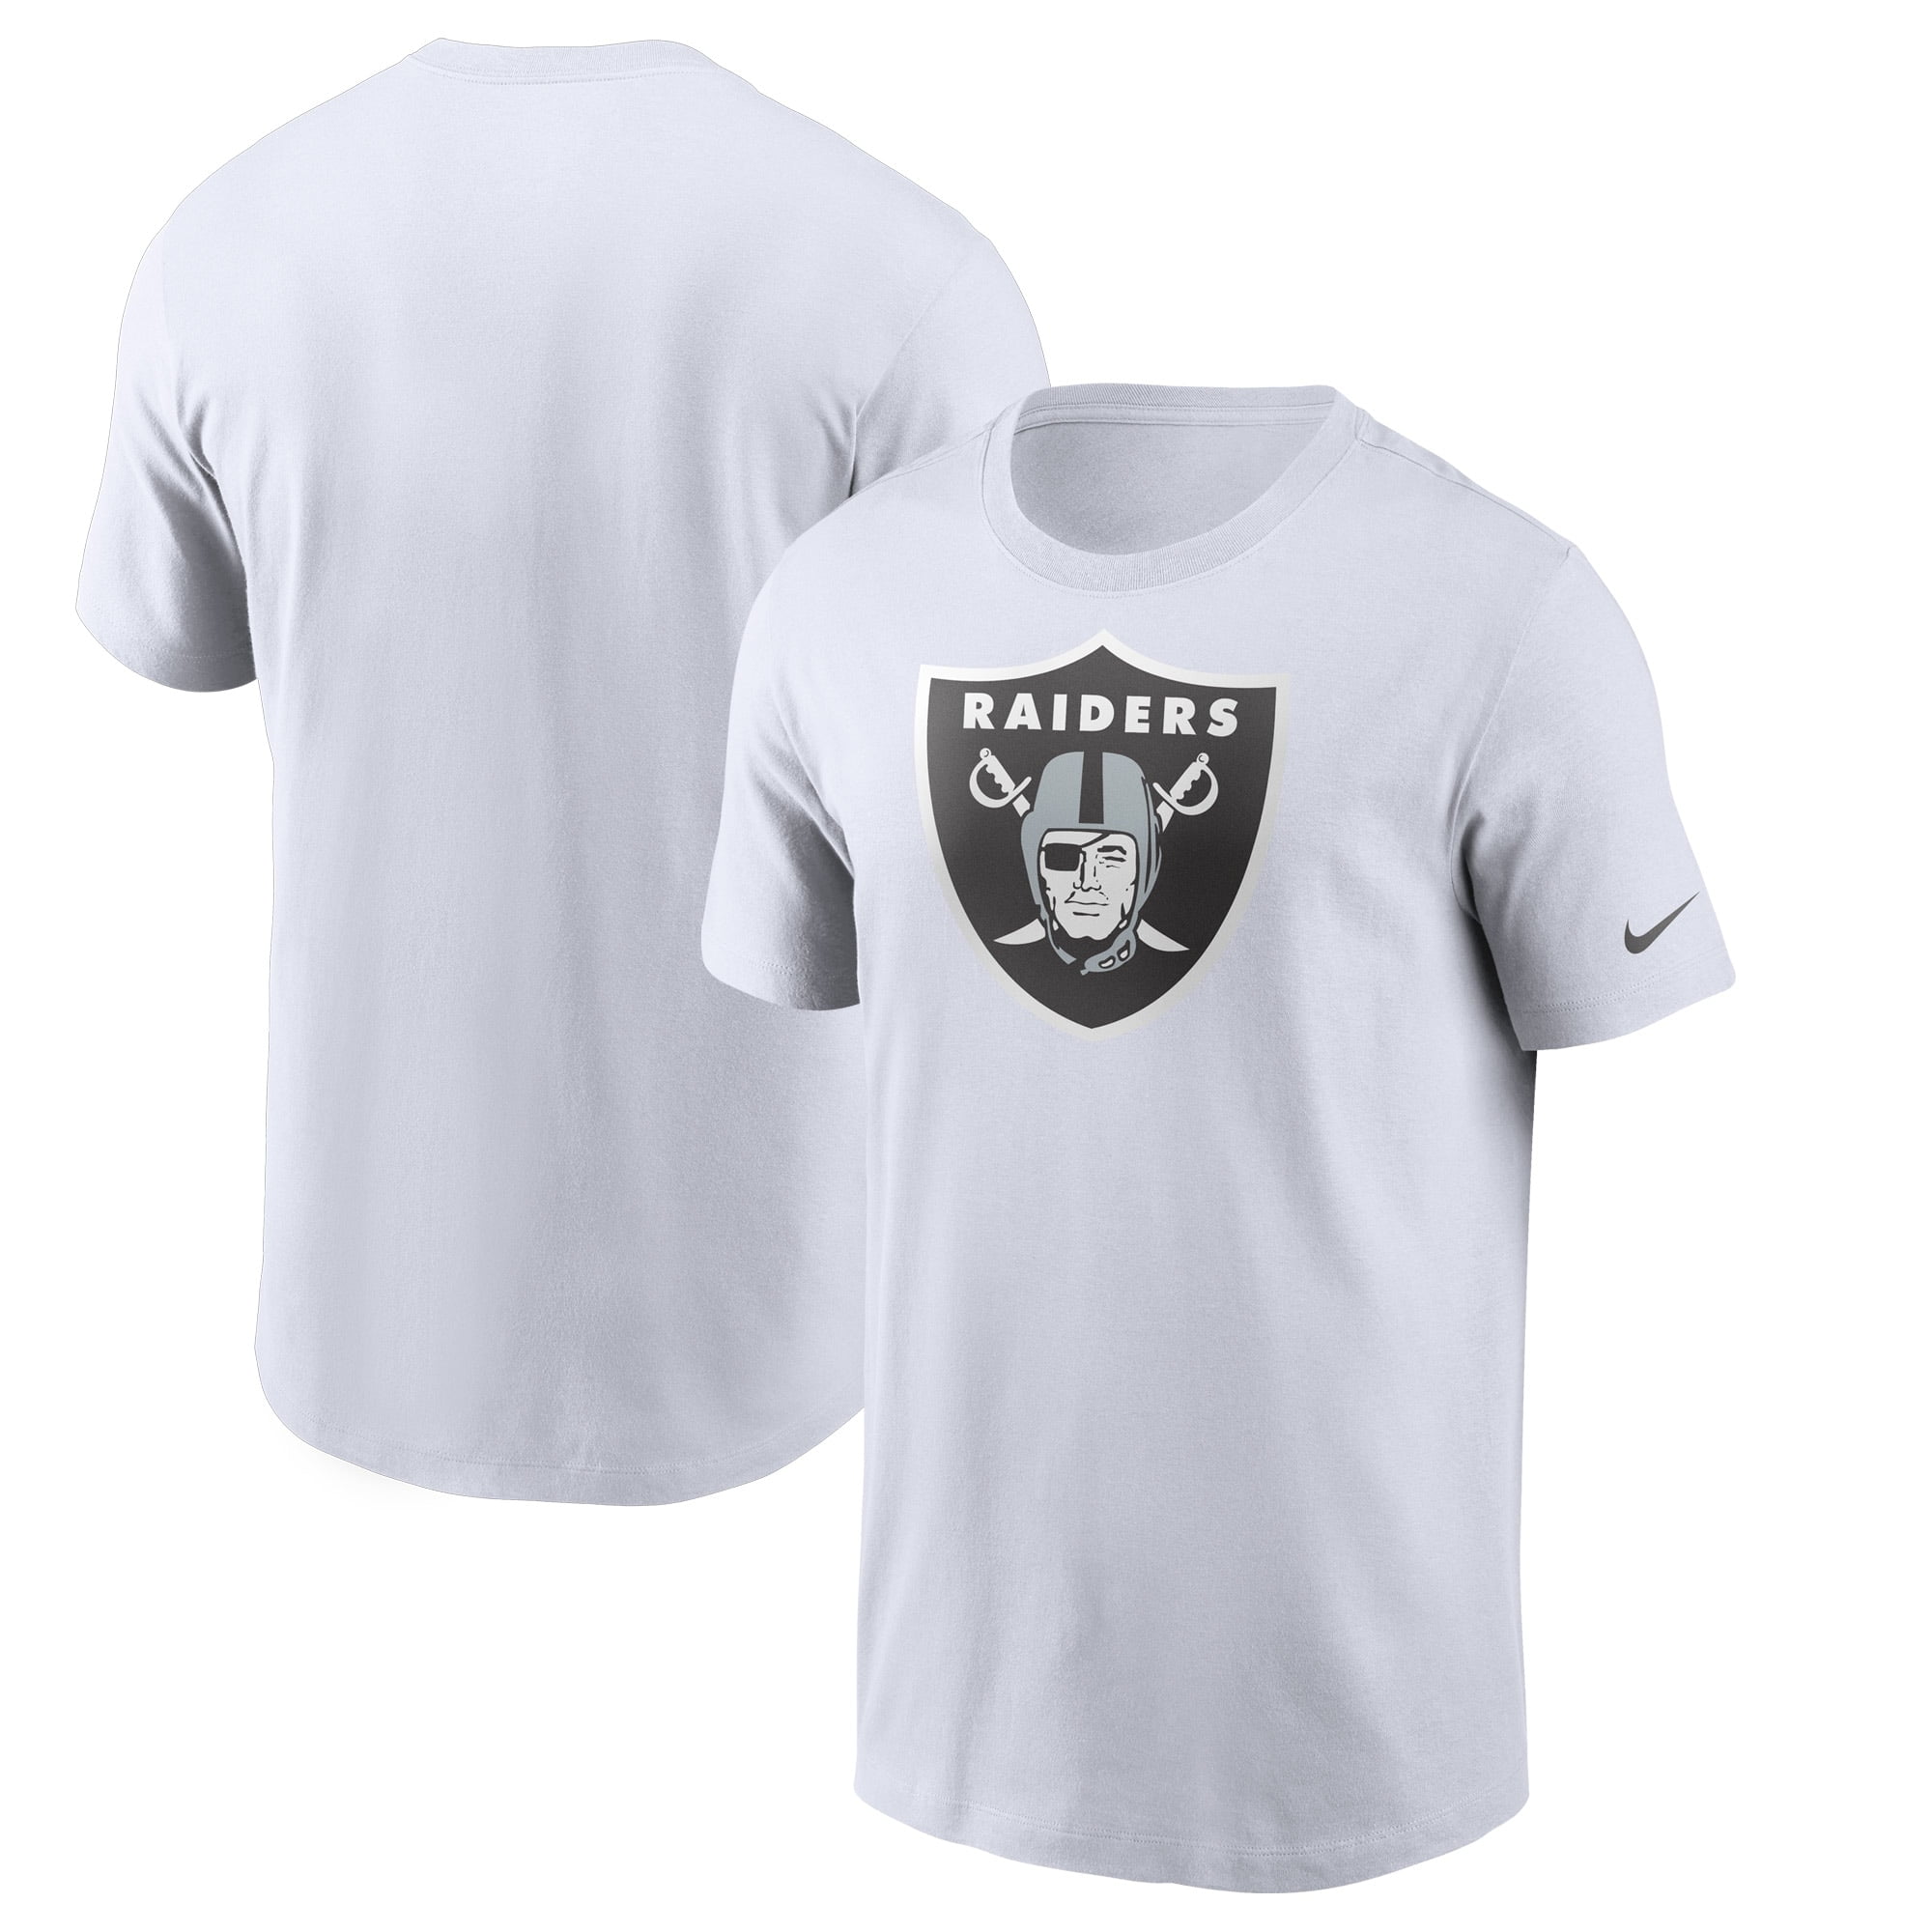 Las Vegas Raiders Mens T-shirt Football Fans Short Sleeve Tee Workout Tops 